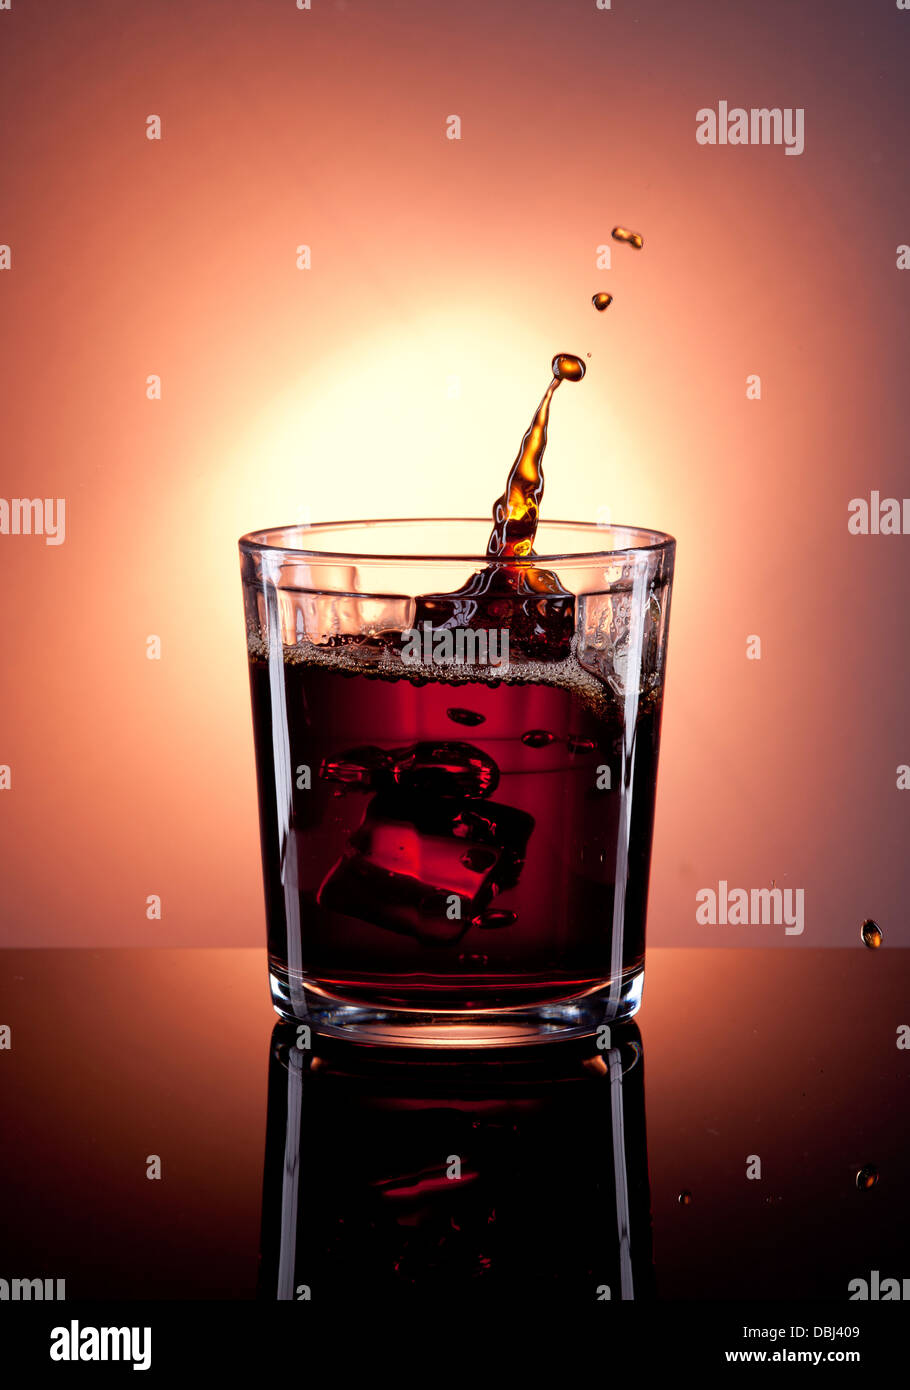 Ice cubes dropped into a glass of liquor make a splash. Stock Photo